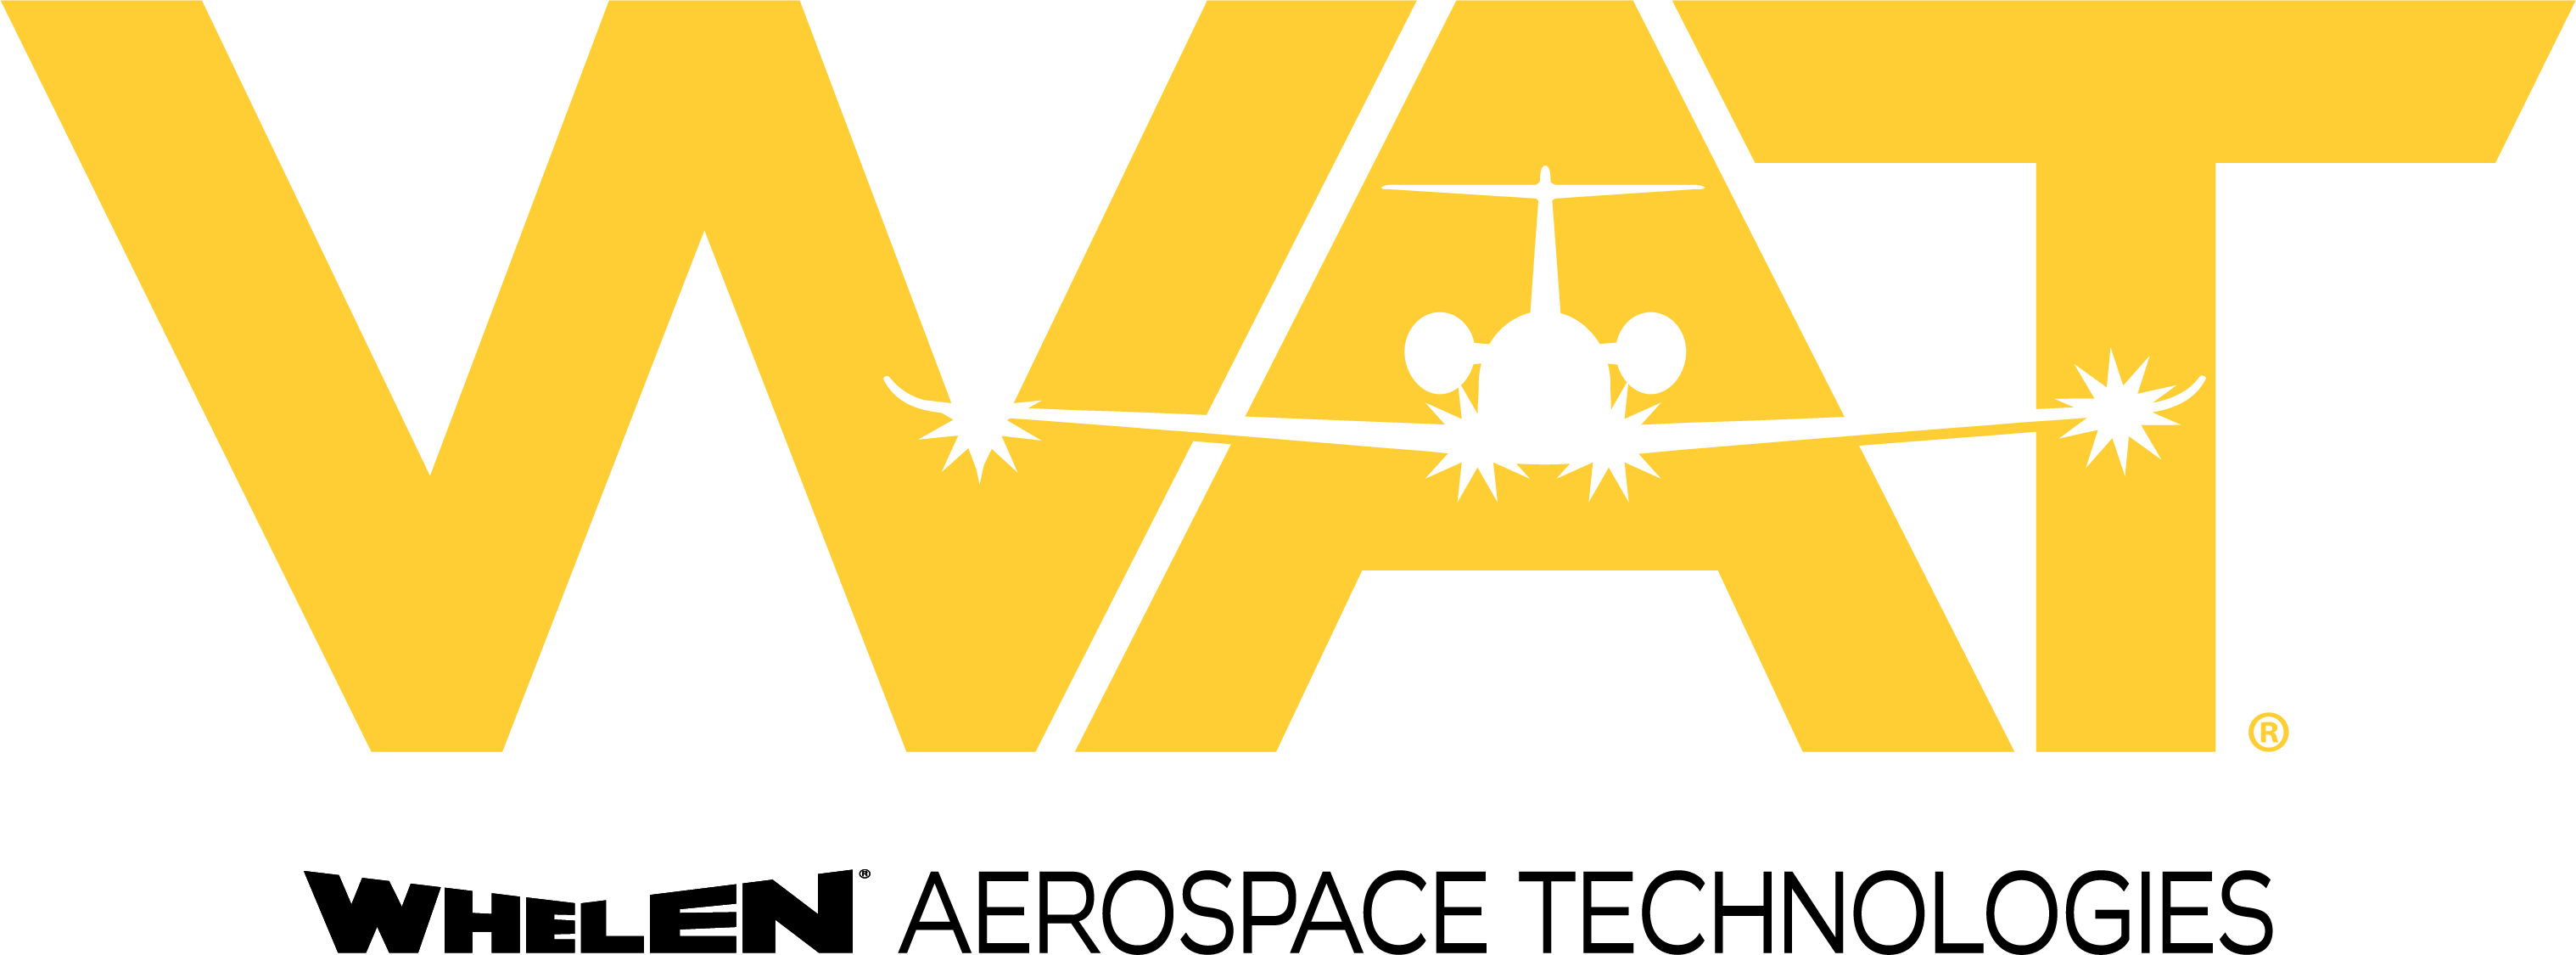 Whelen Aerospace Technologies logo